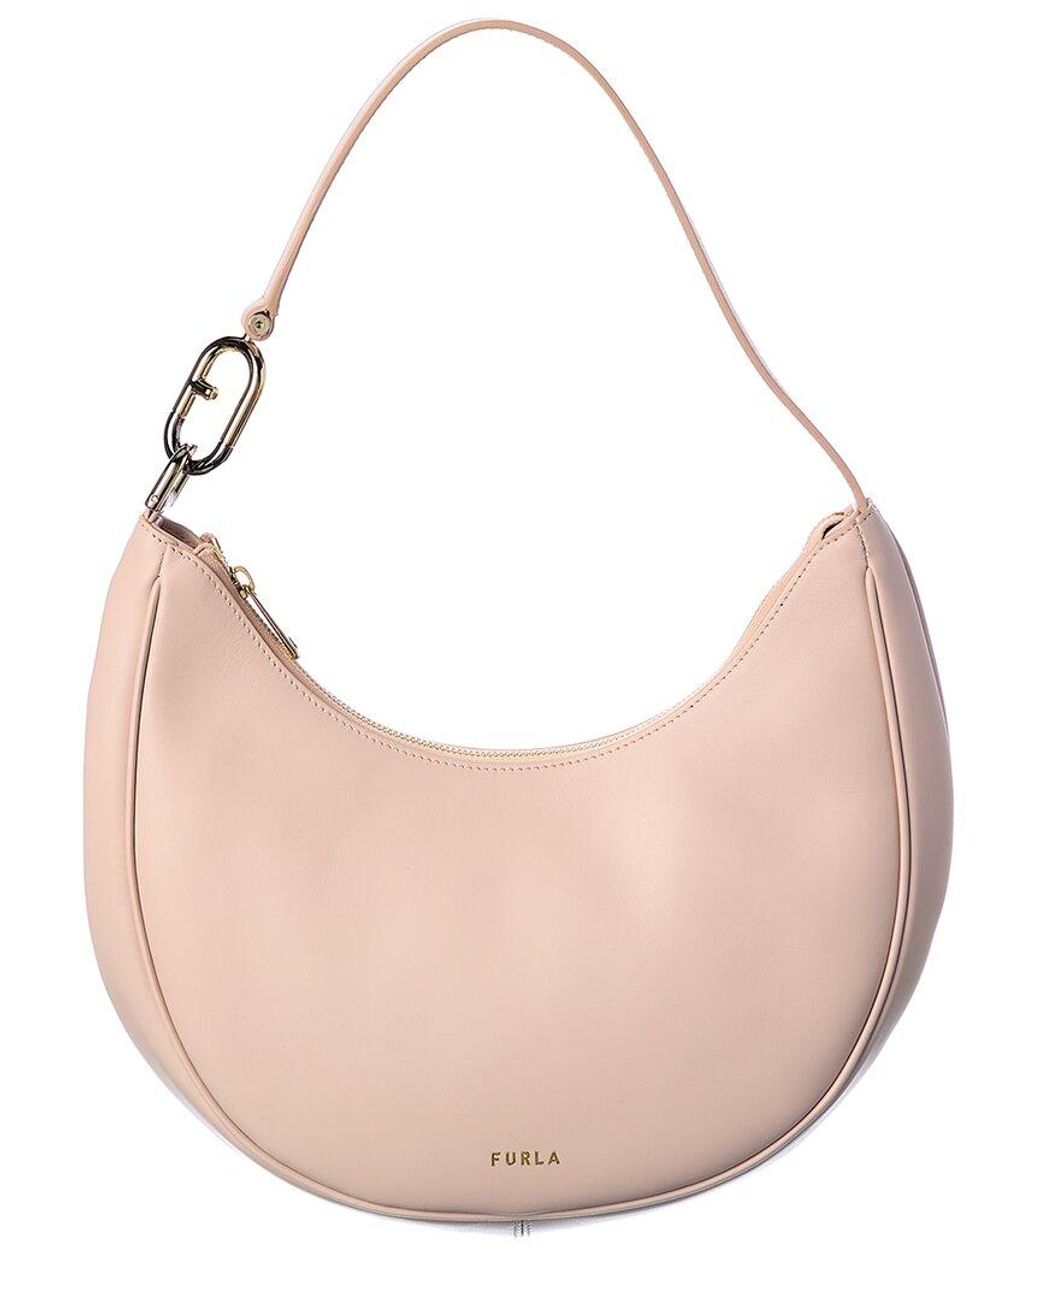 Furla Primavera Medium Leather Shoulder Bag in Pink | Lyst